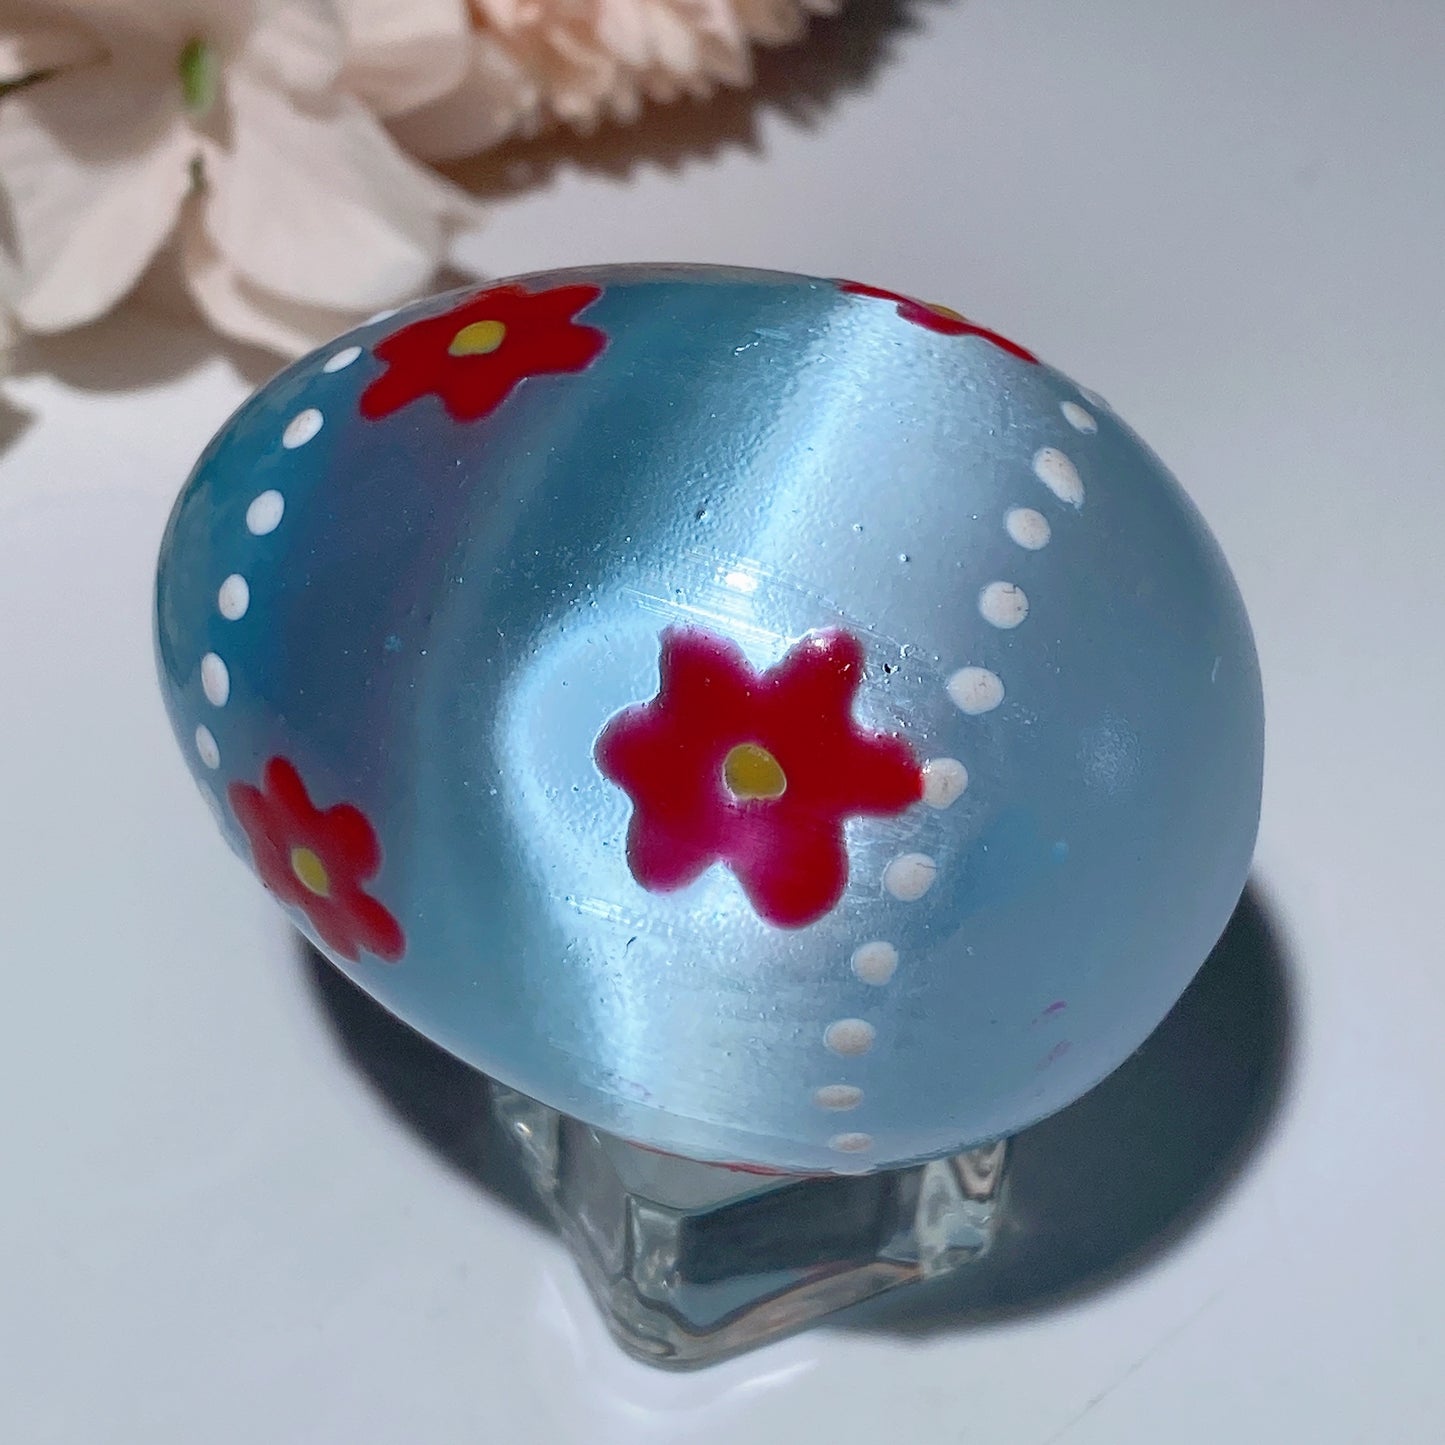 60mm Aura Pink Blue Selenite Egg with Hand Painting for Easter Decor Bulk Wholesale